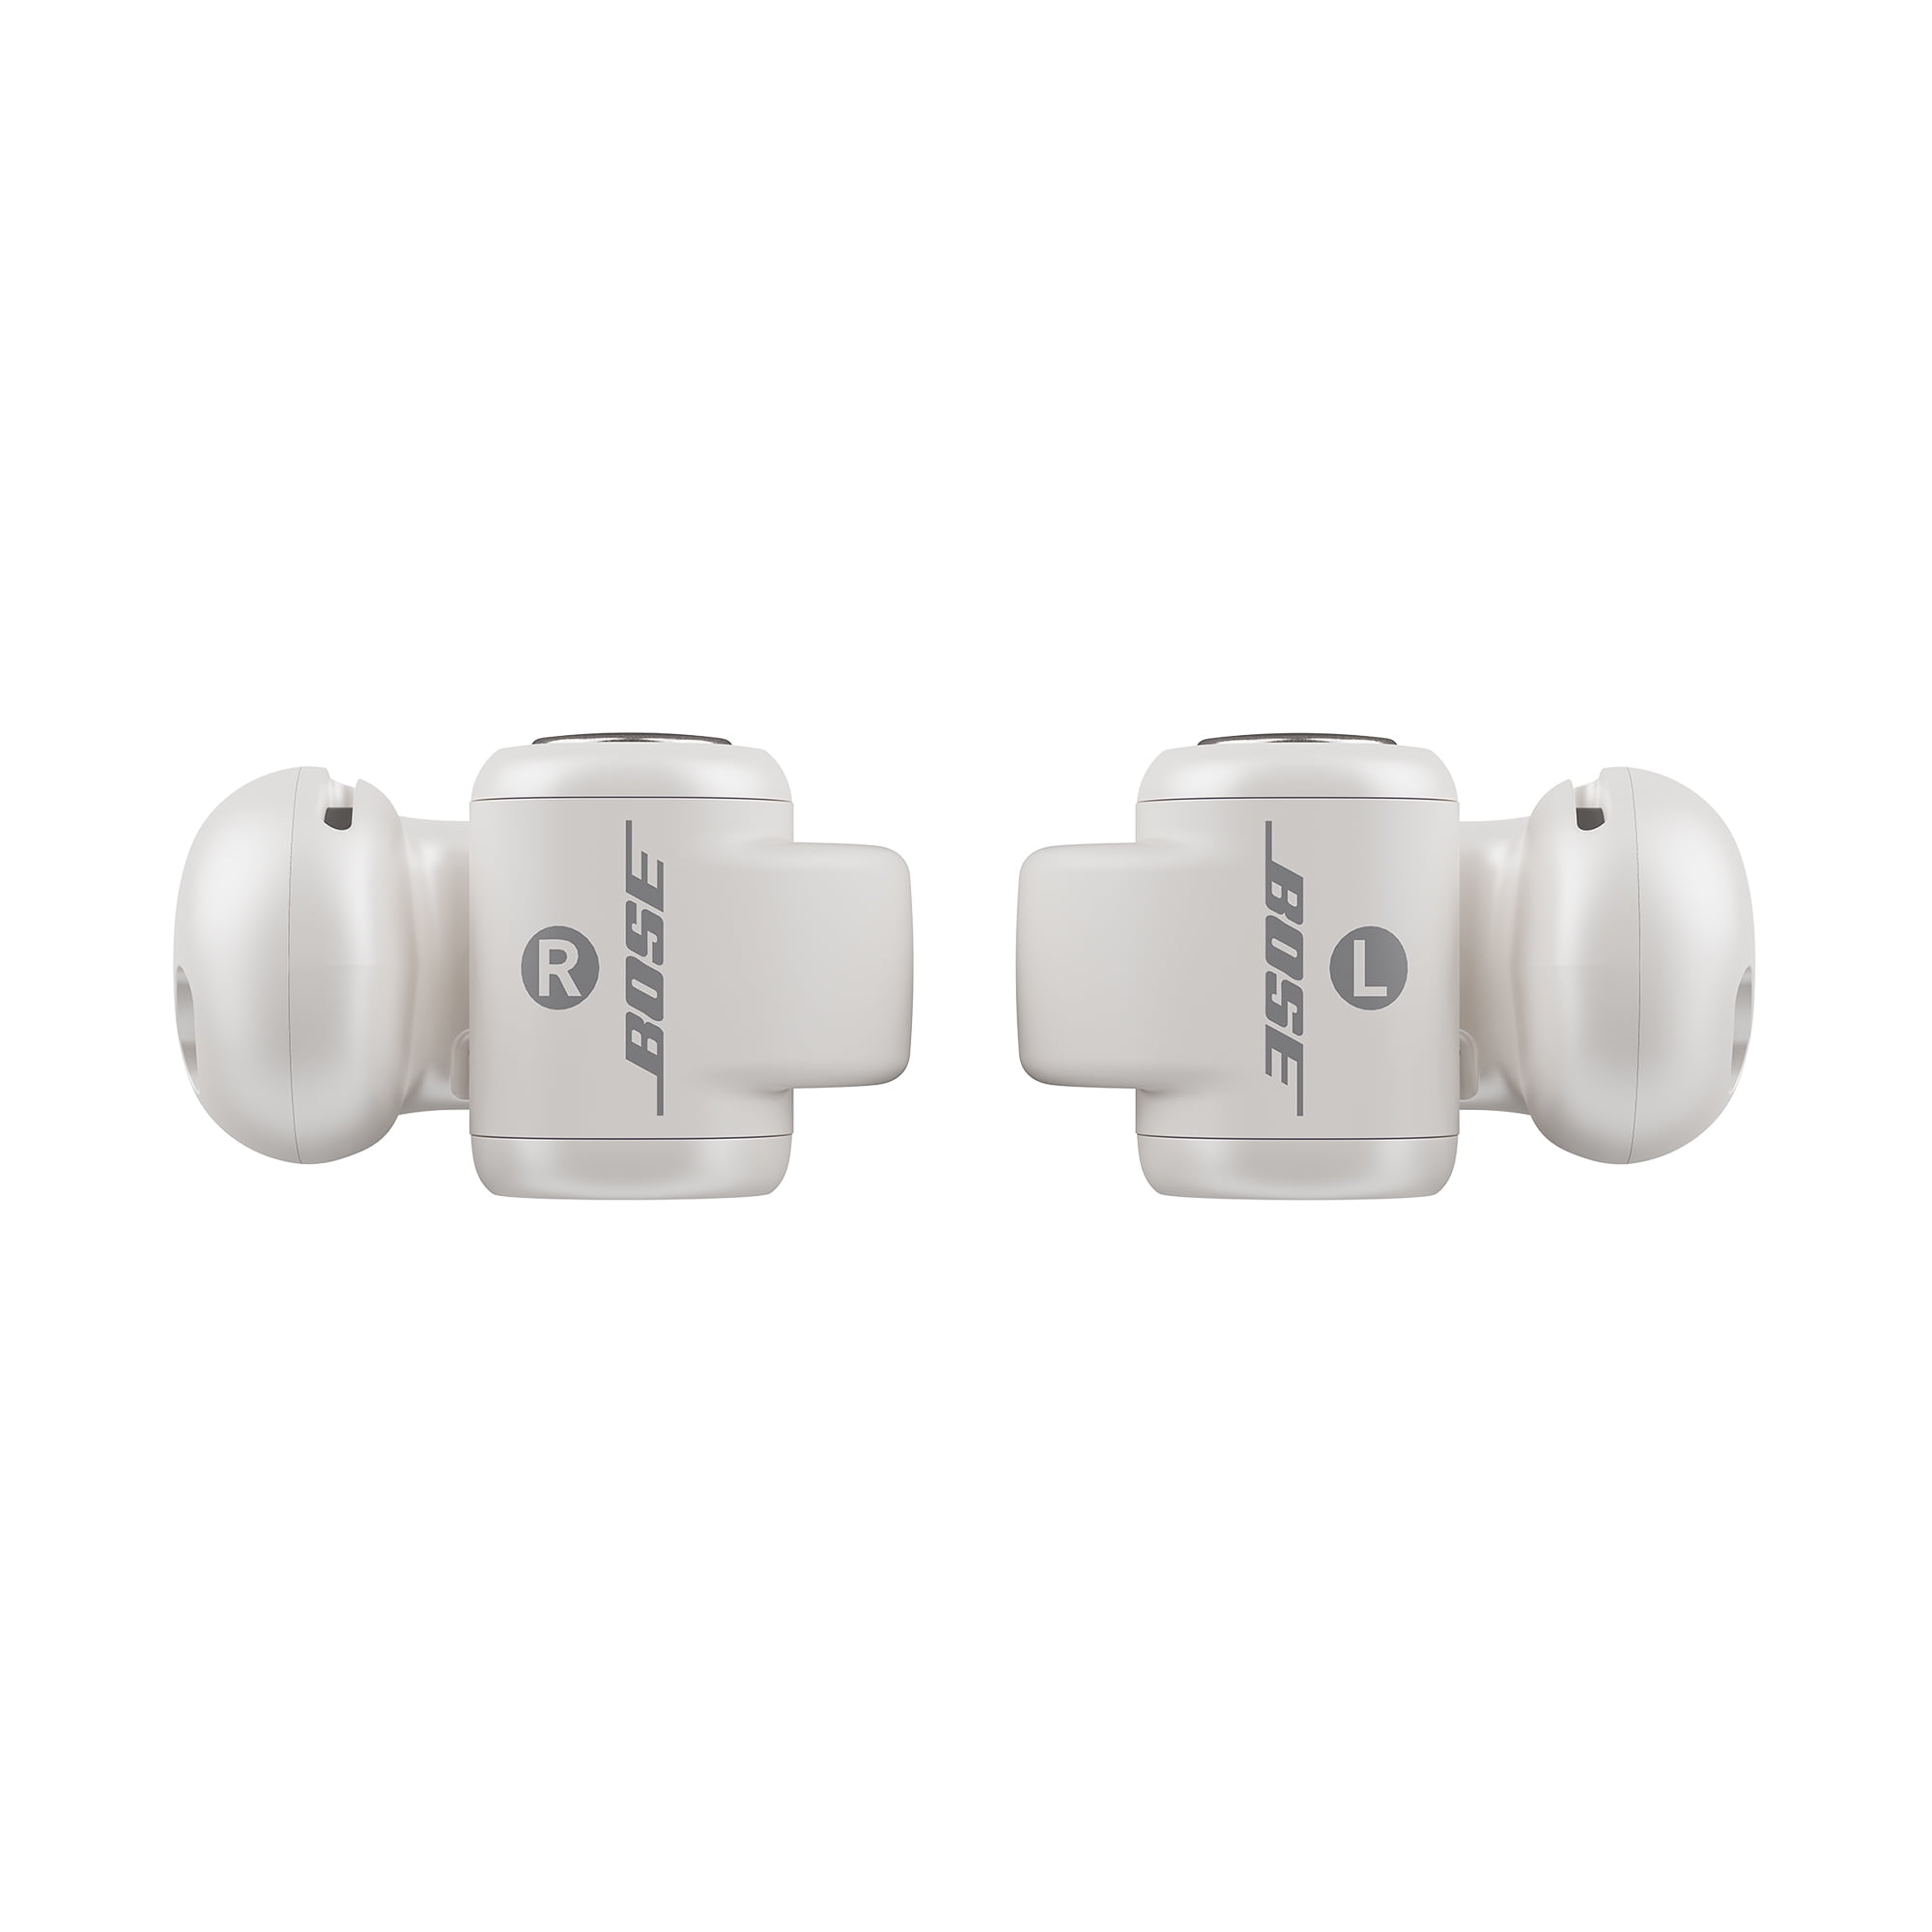 Bose Ultra Open Ear Headphones, Bluetooth Wireless Earbuds with 